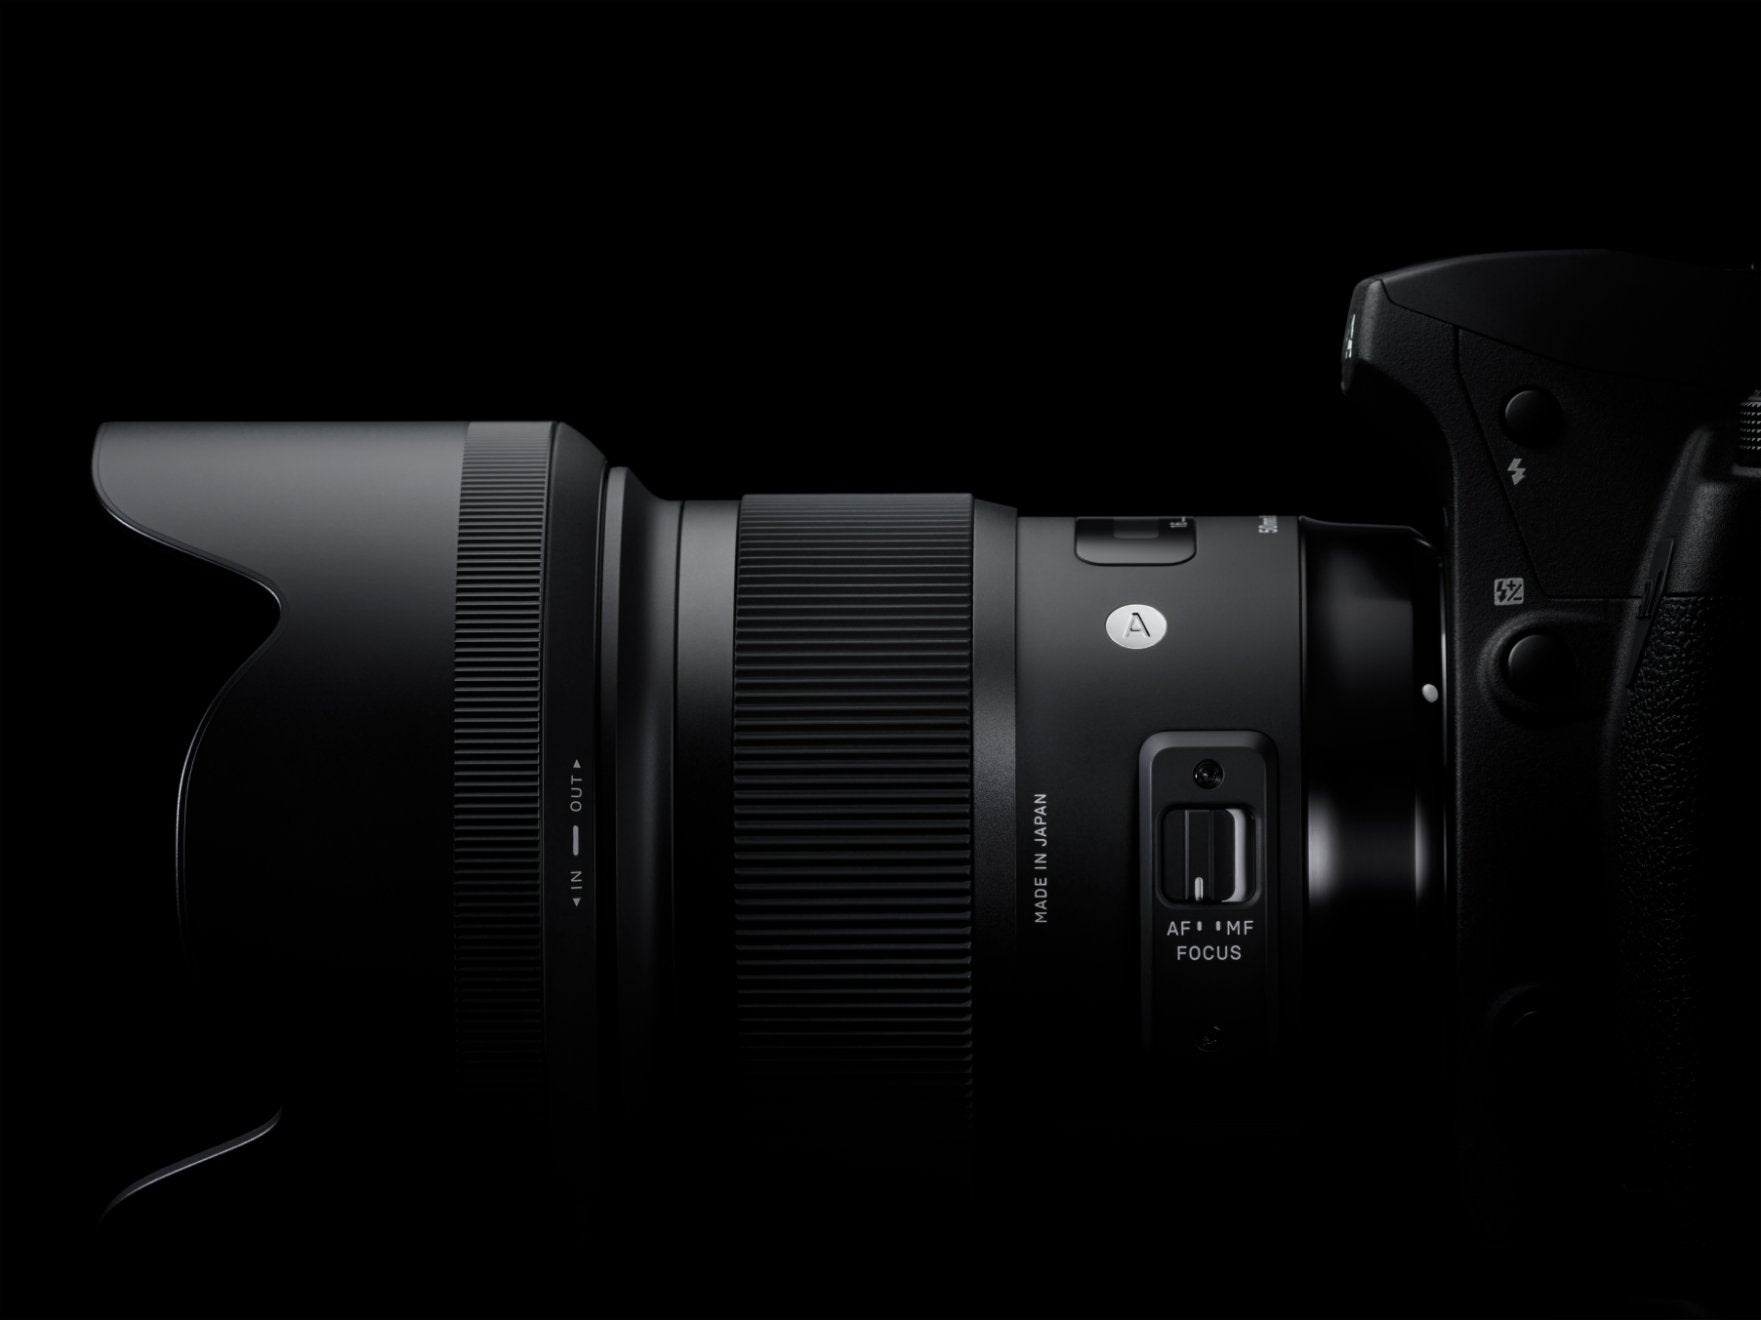 Sigma 50mm F1.4 DG HSM Art lens - L mount